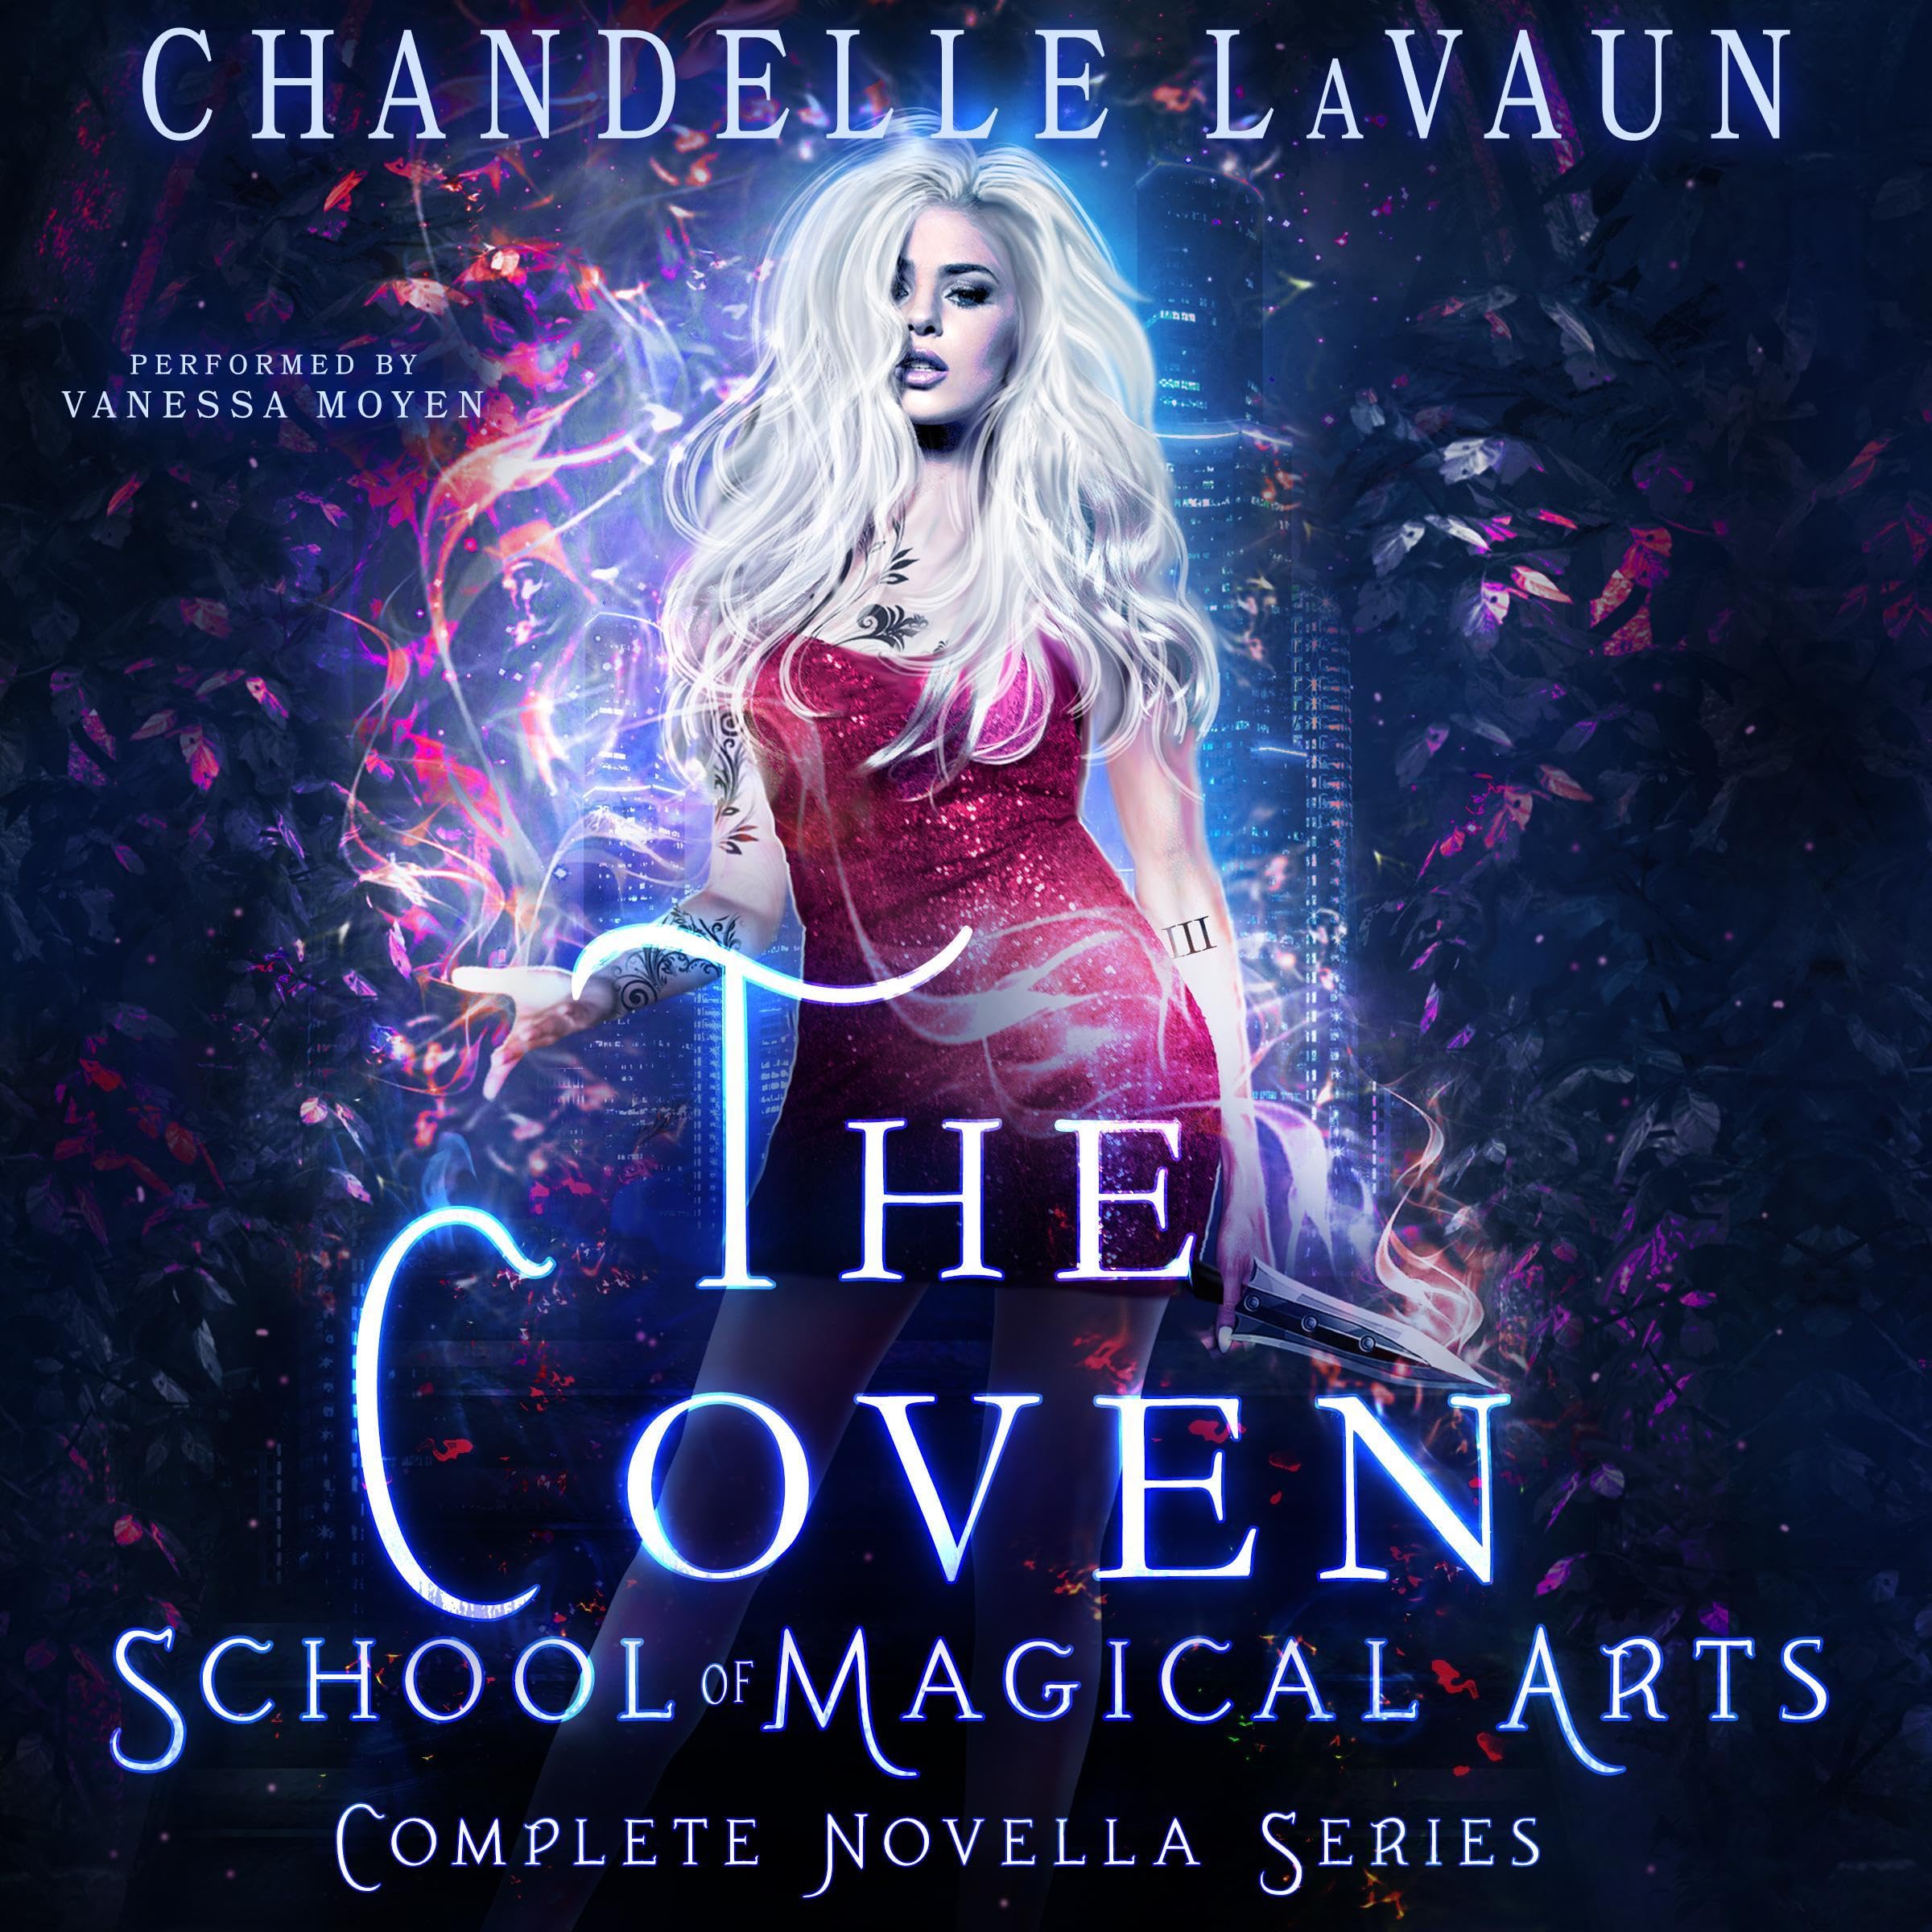 School of Magical Arts: Complete Novella Series: The Coven